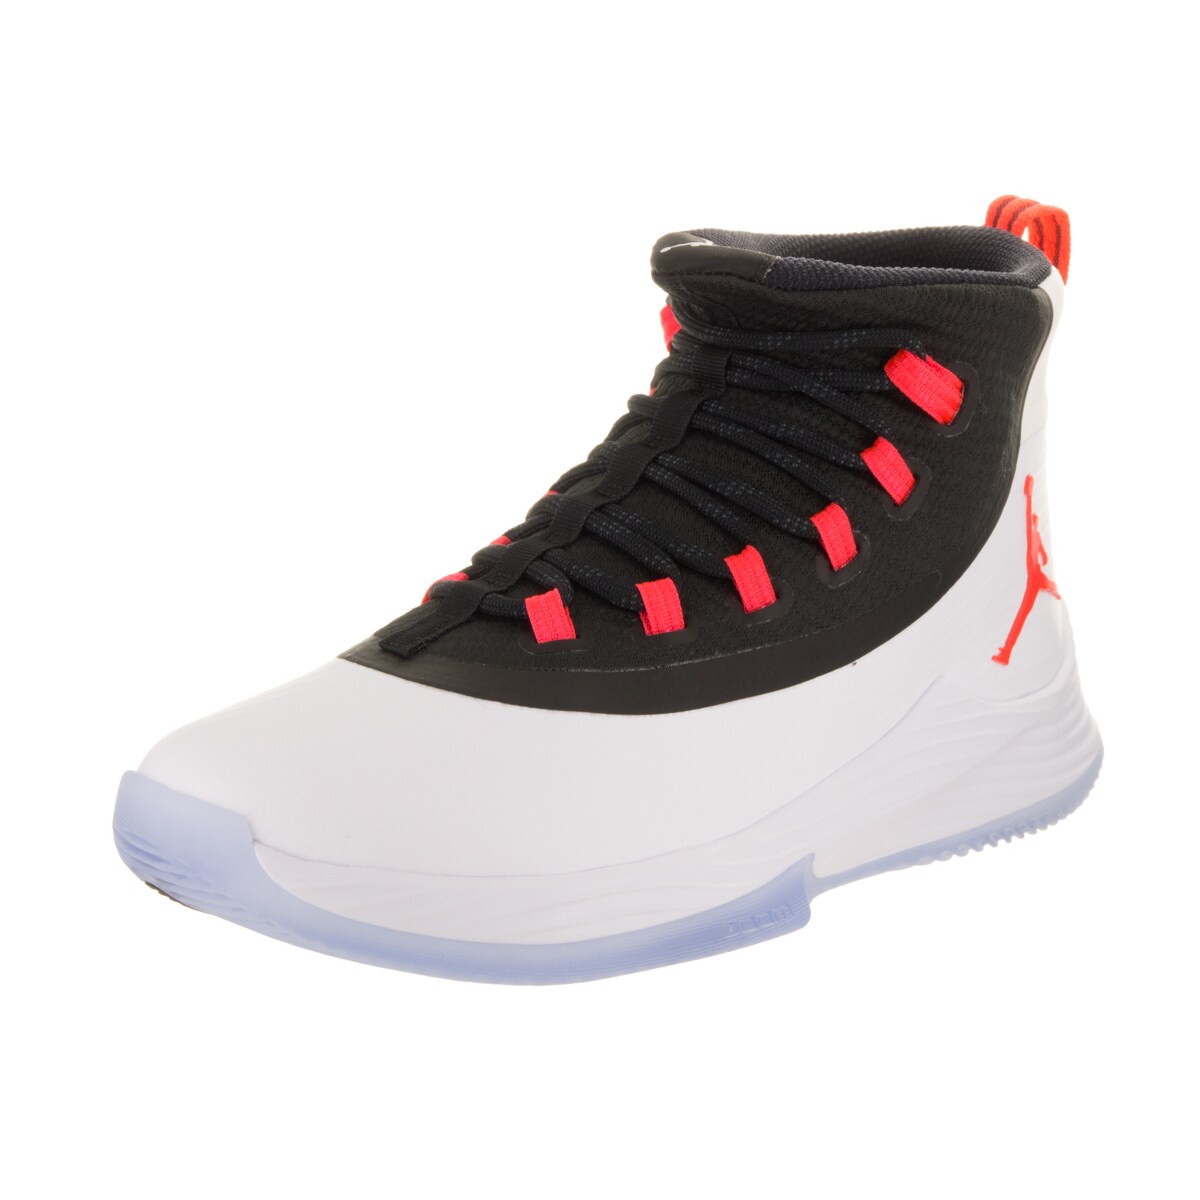 Buy the Nike Men's Air Jordan Ultra Fly White Sneakers Size 10